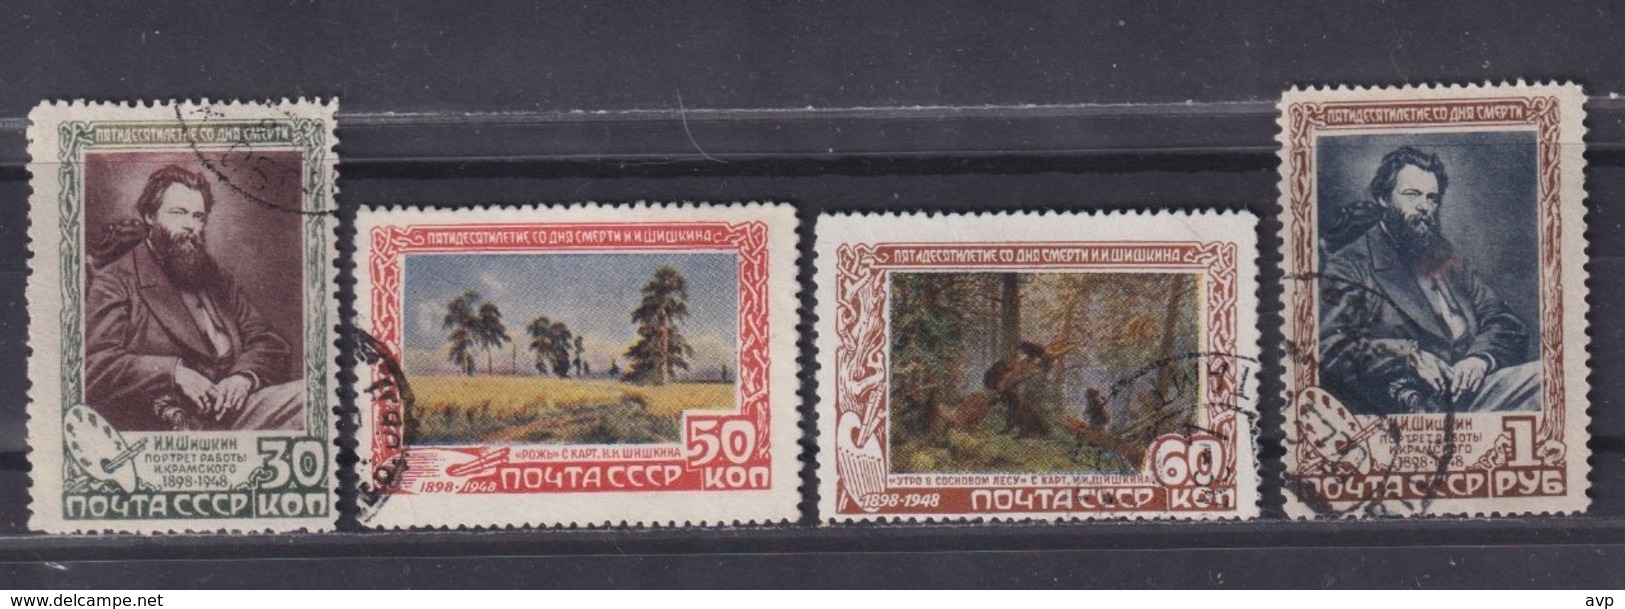 USSR 1948 Michel 1220-1223 Shishkin Used - Gebraucht